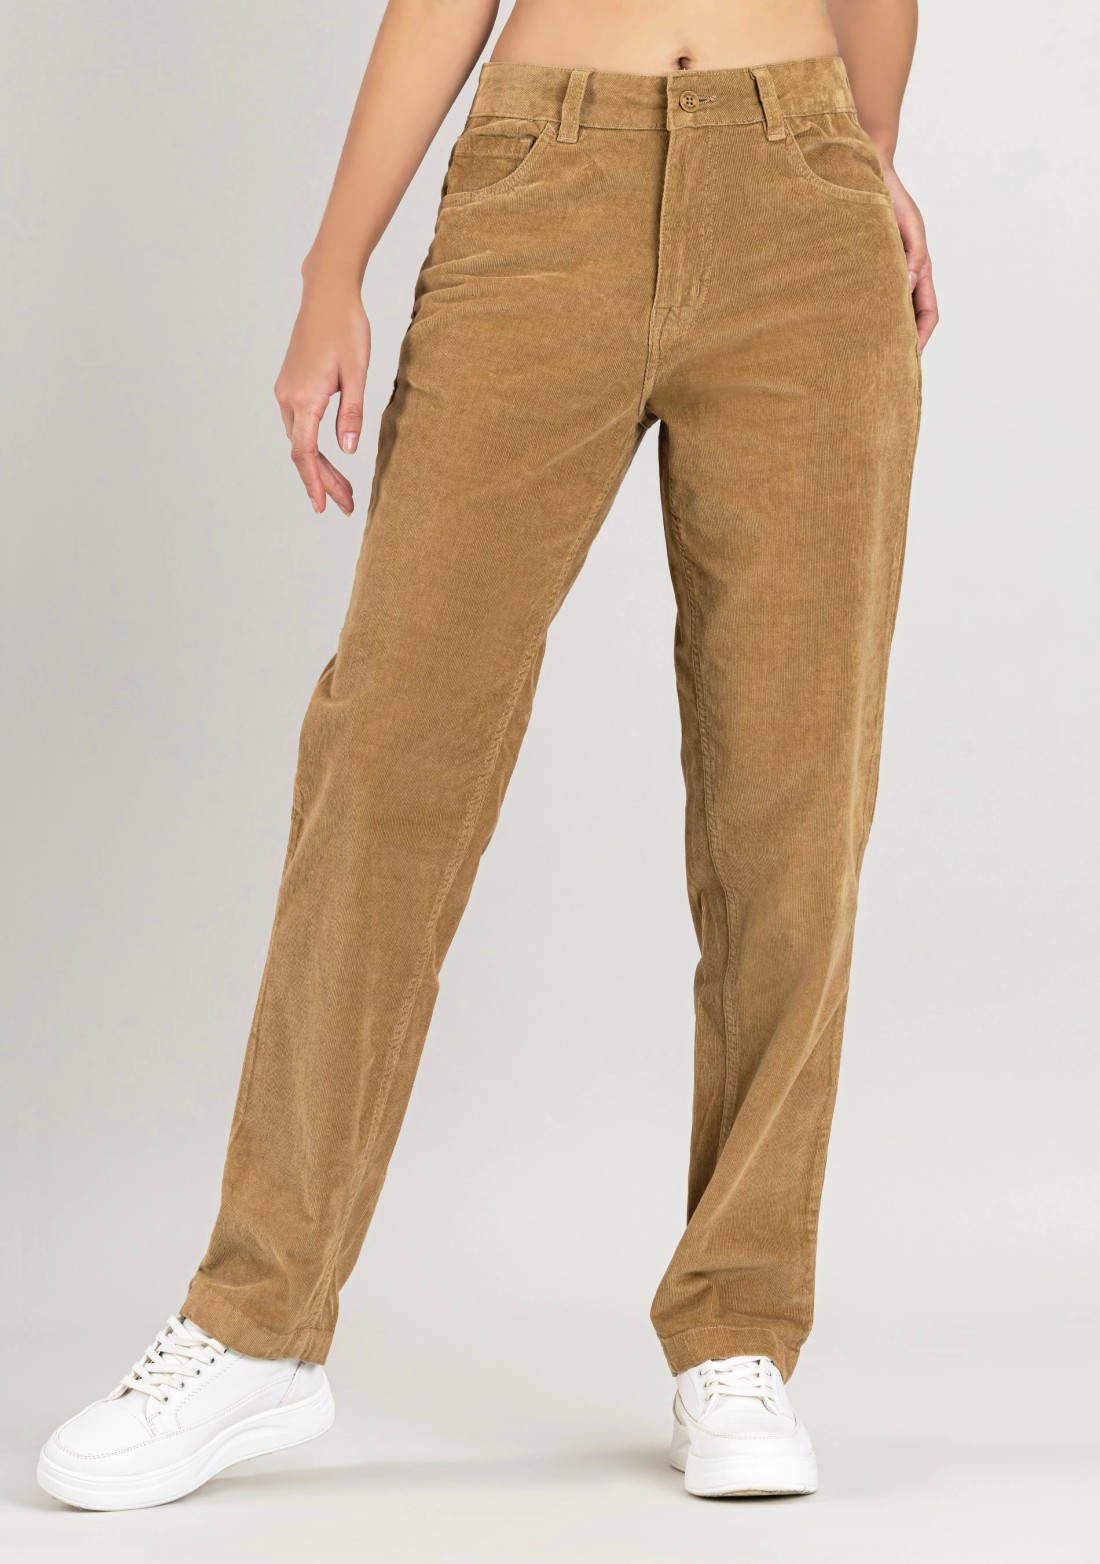 Wide Legged Brown Pants - Corduroy Pants | Corduroy pants outfit, Wide leg  pants, Pants for women